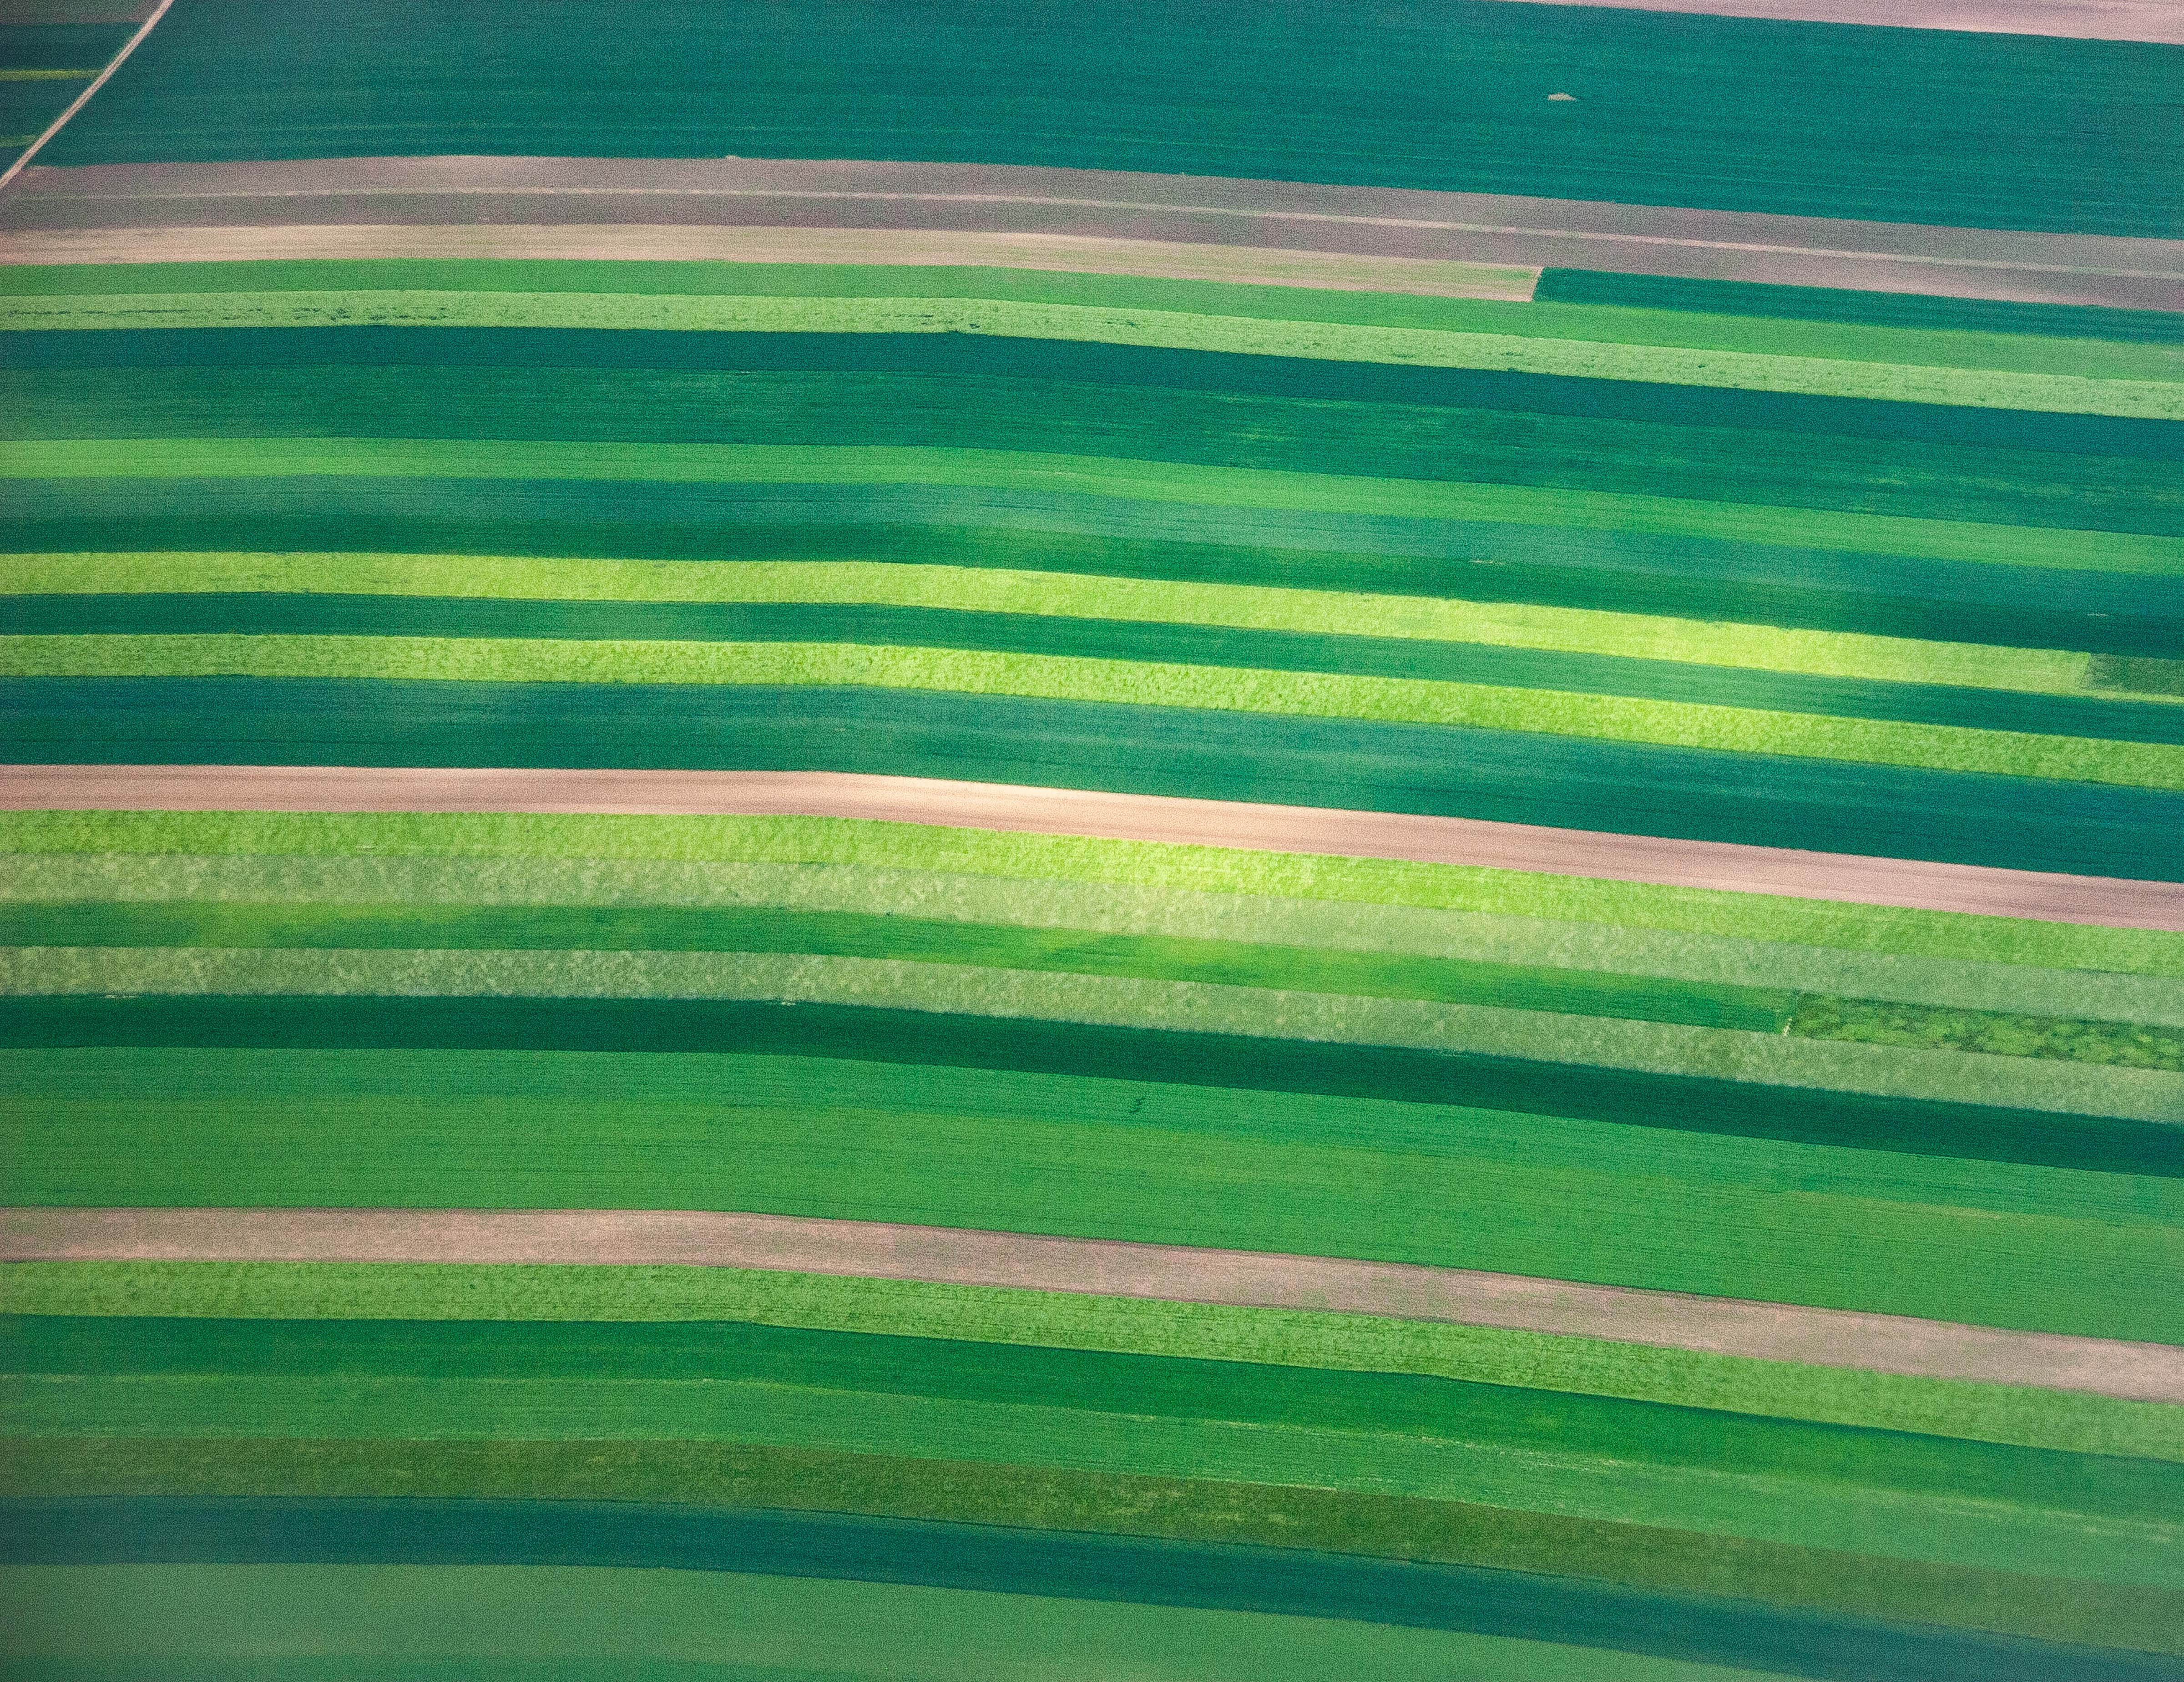 Austria, Niederosterreich Prov, Striped Fields, 2006, IMG 8793